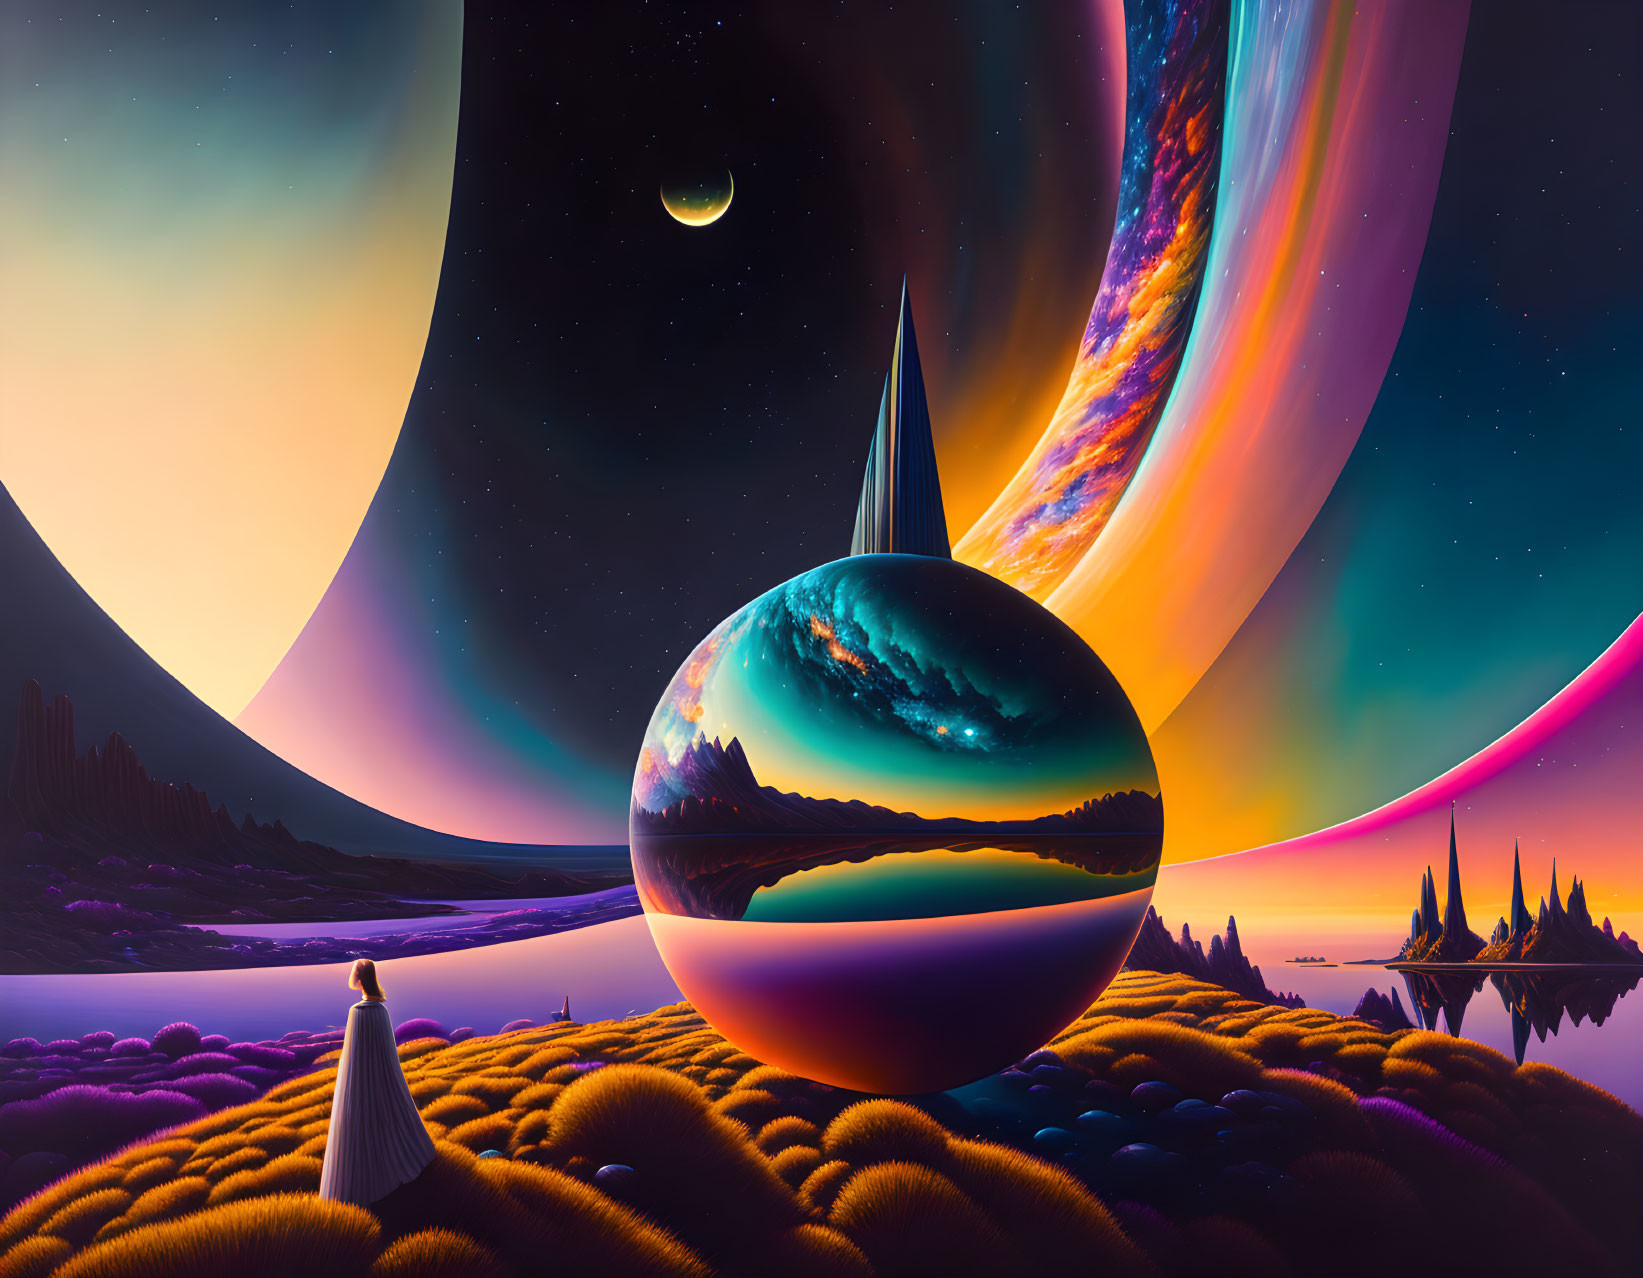 Person observing large reflective orb on vibrant alien landscape